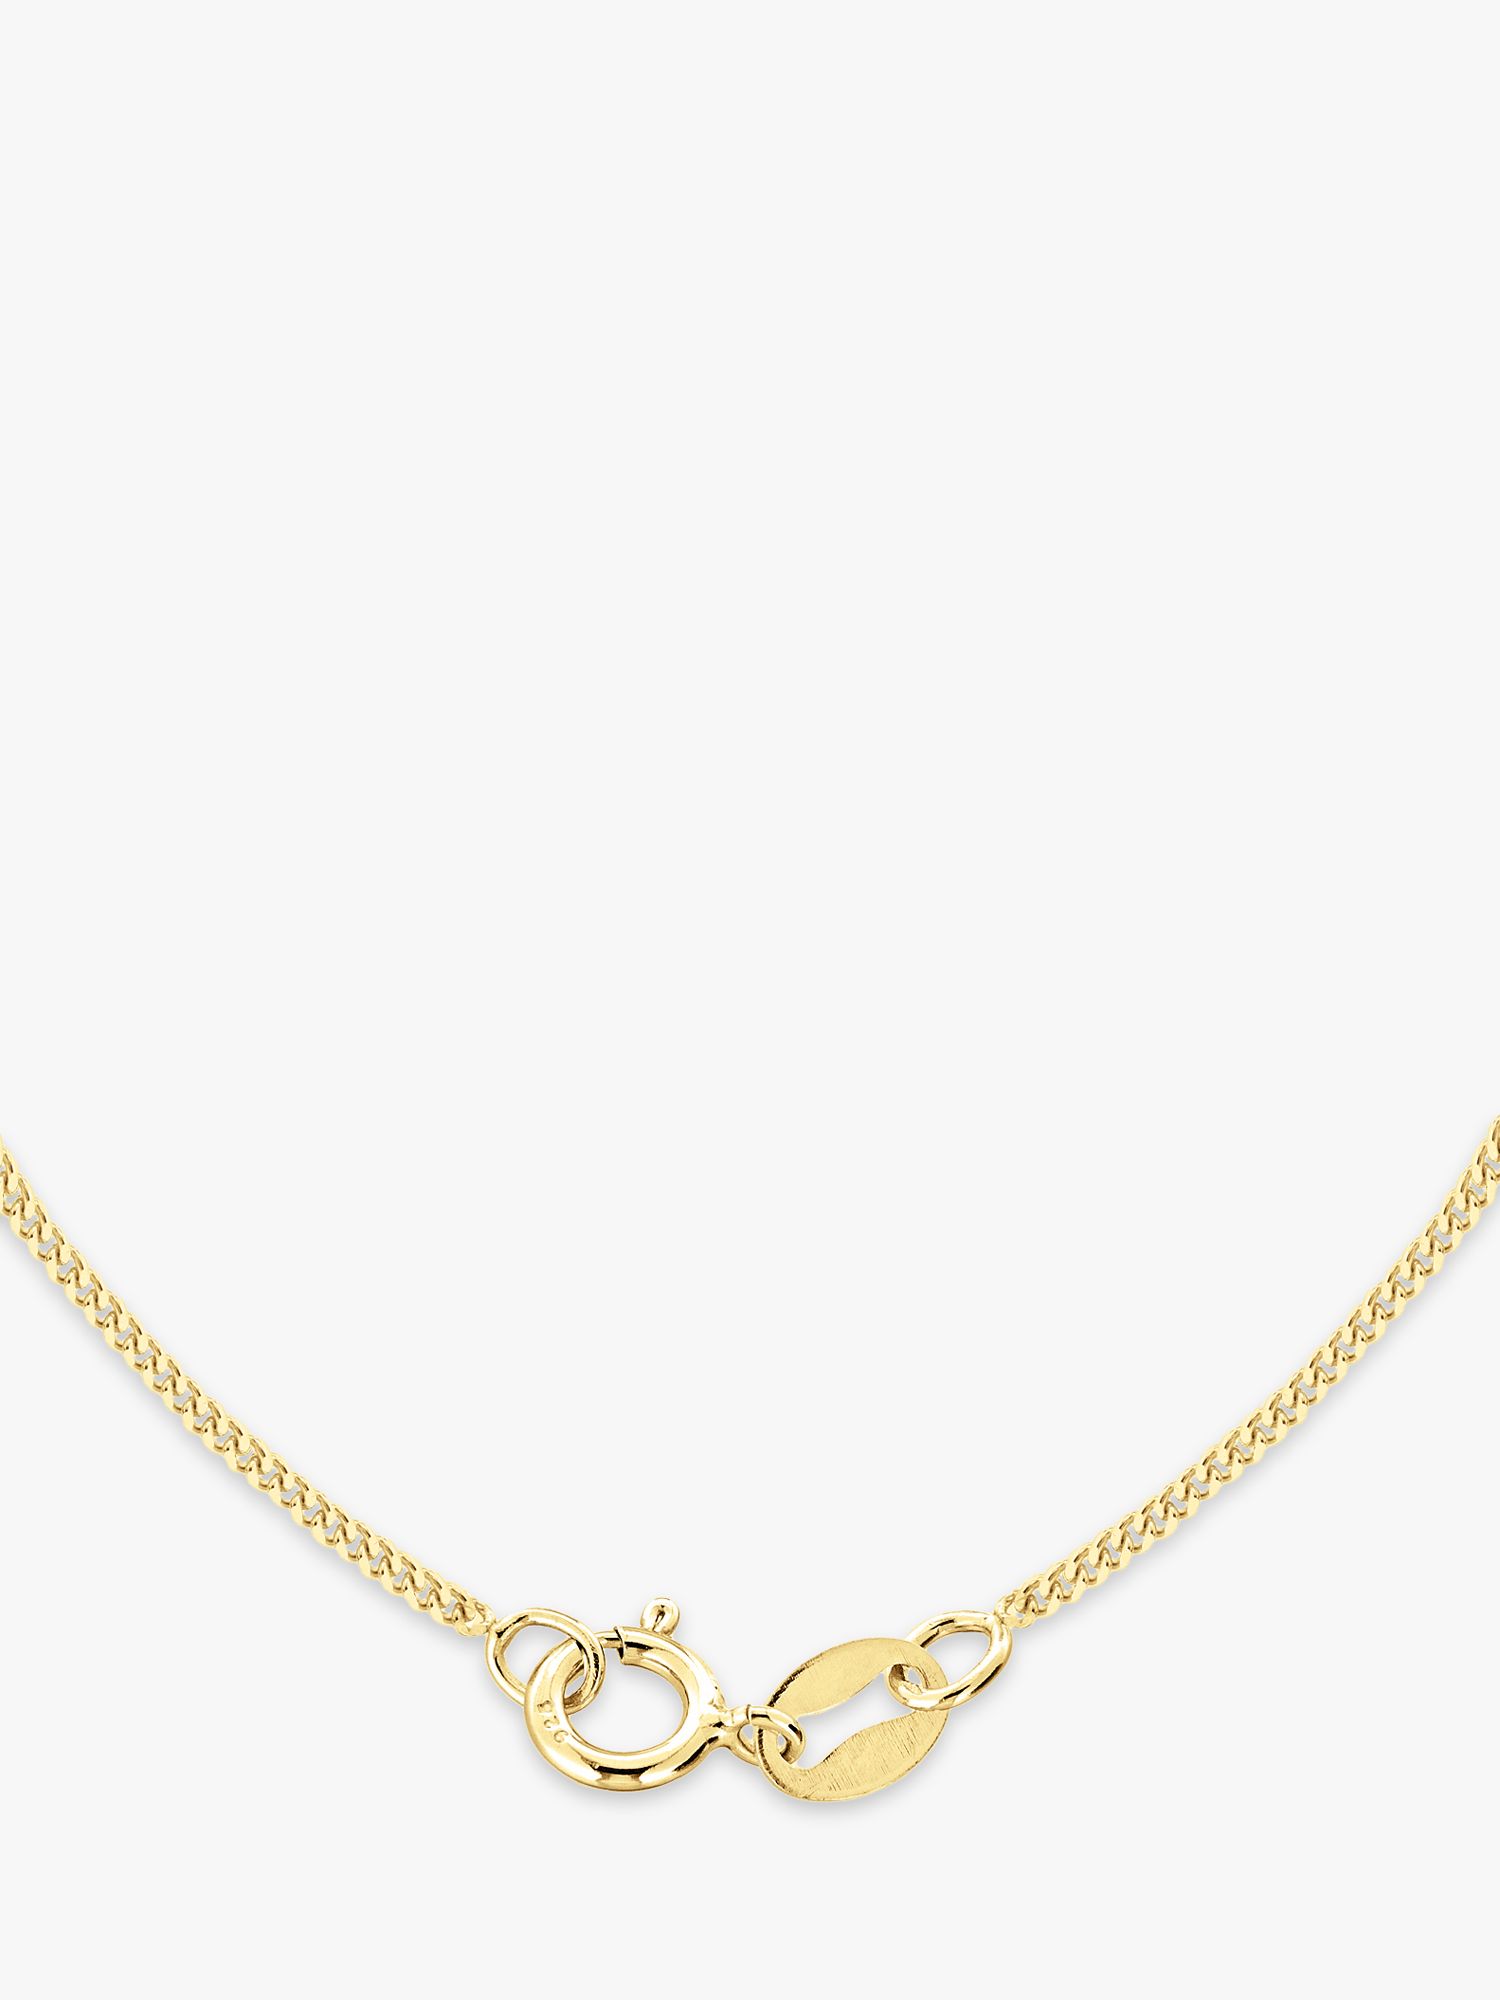 Buy IBB 9ct Gold Etched St Christopher Heart Locket Pendant Necklace Online at johnlewis.com